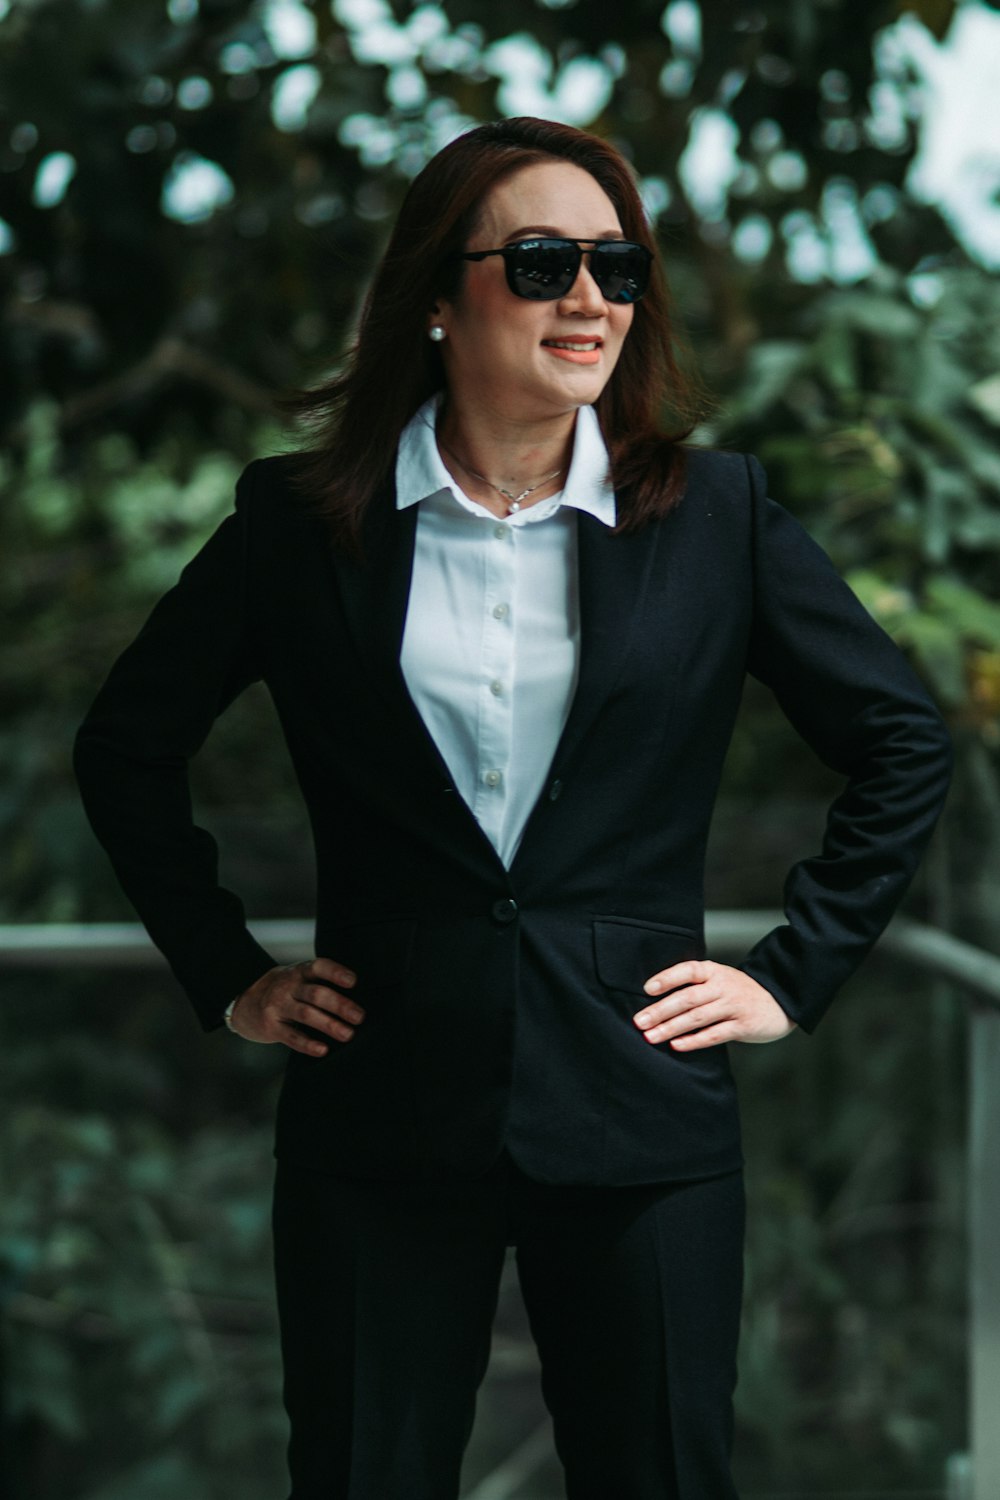 Una donna in giacca e cravatta e occhiali da sole in posa per una foto